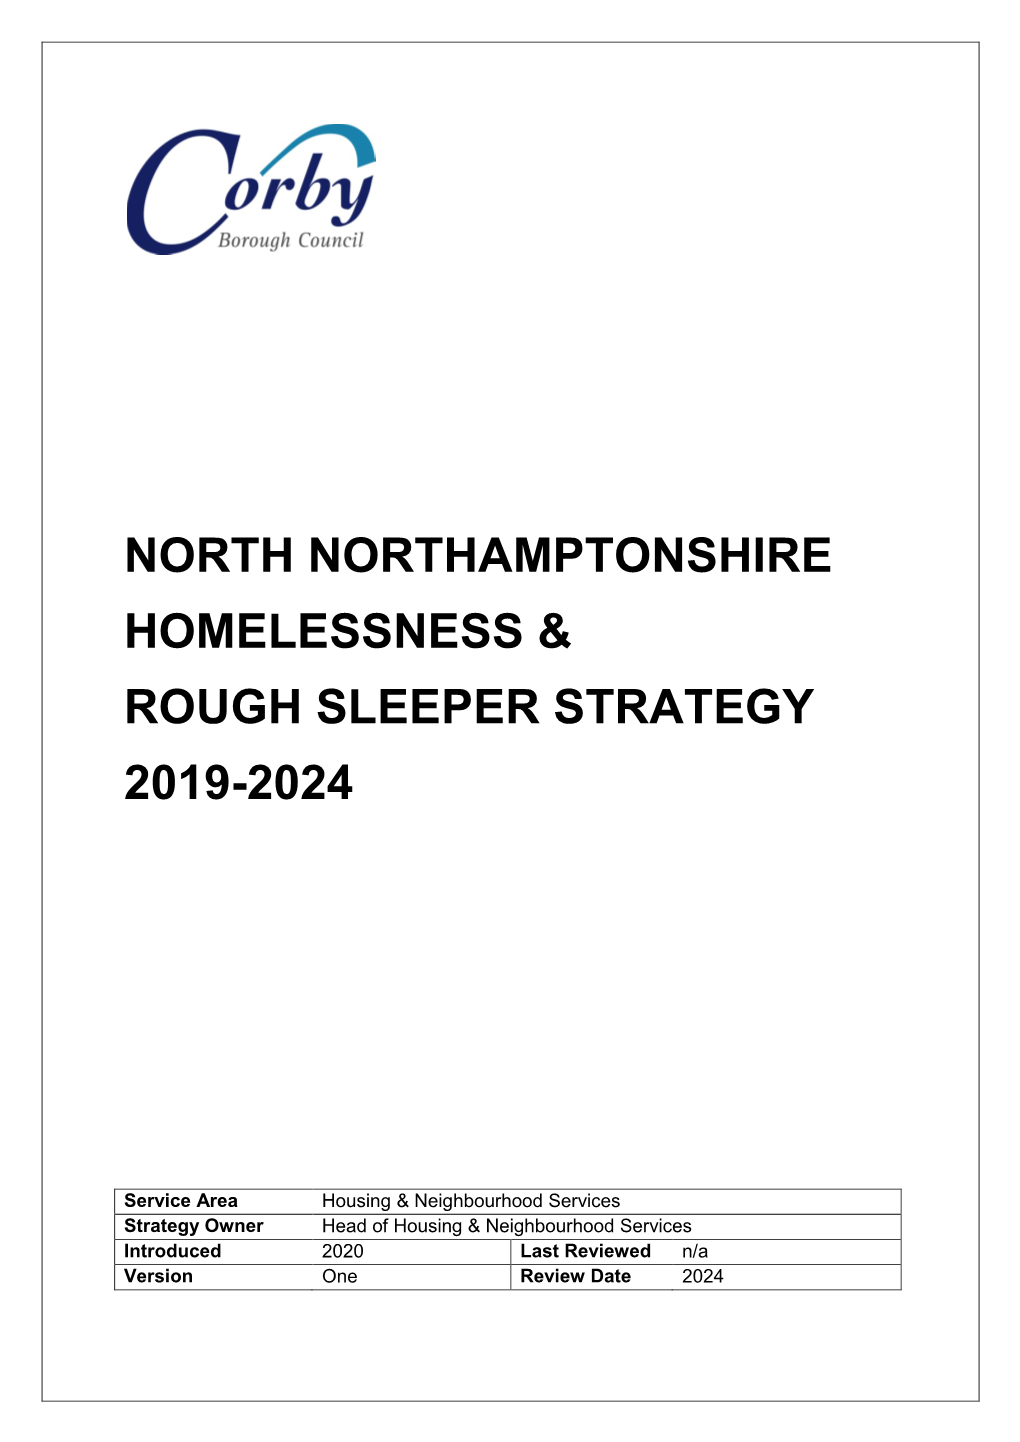 North Northamptonshire Homelessness & Rough Sleeper Strategy 2019-2024